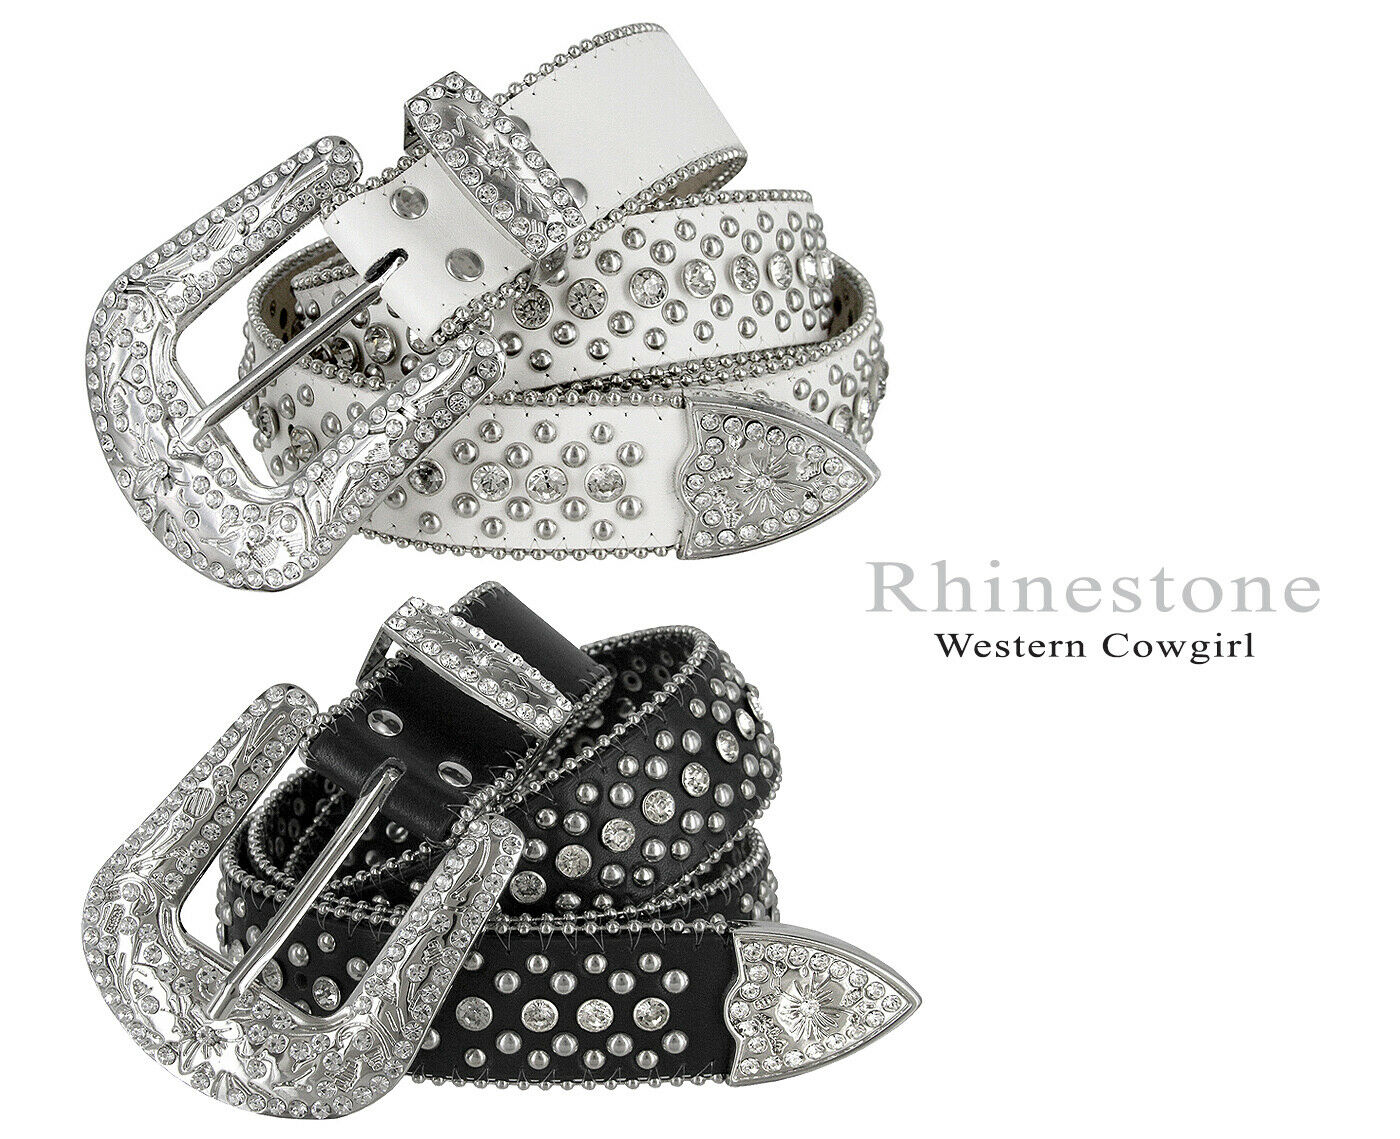 Rhinestone Western Cowgirl Bling Studded Design Leather Belt 1-1/2"(38mm) Wide